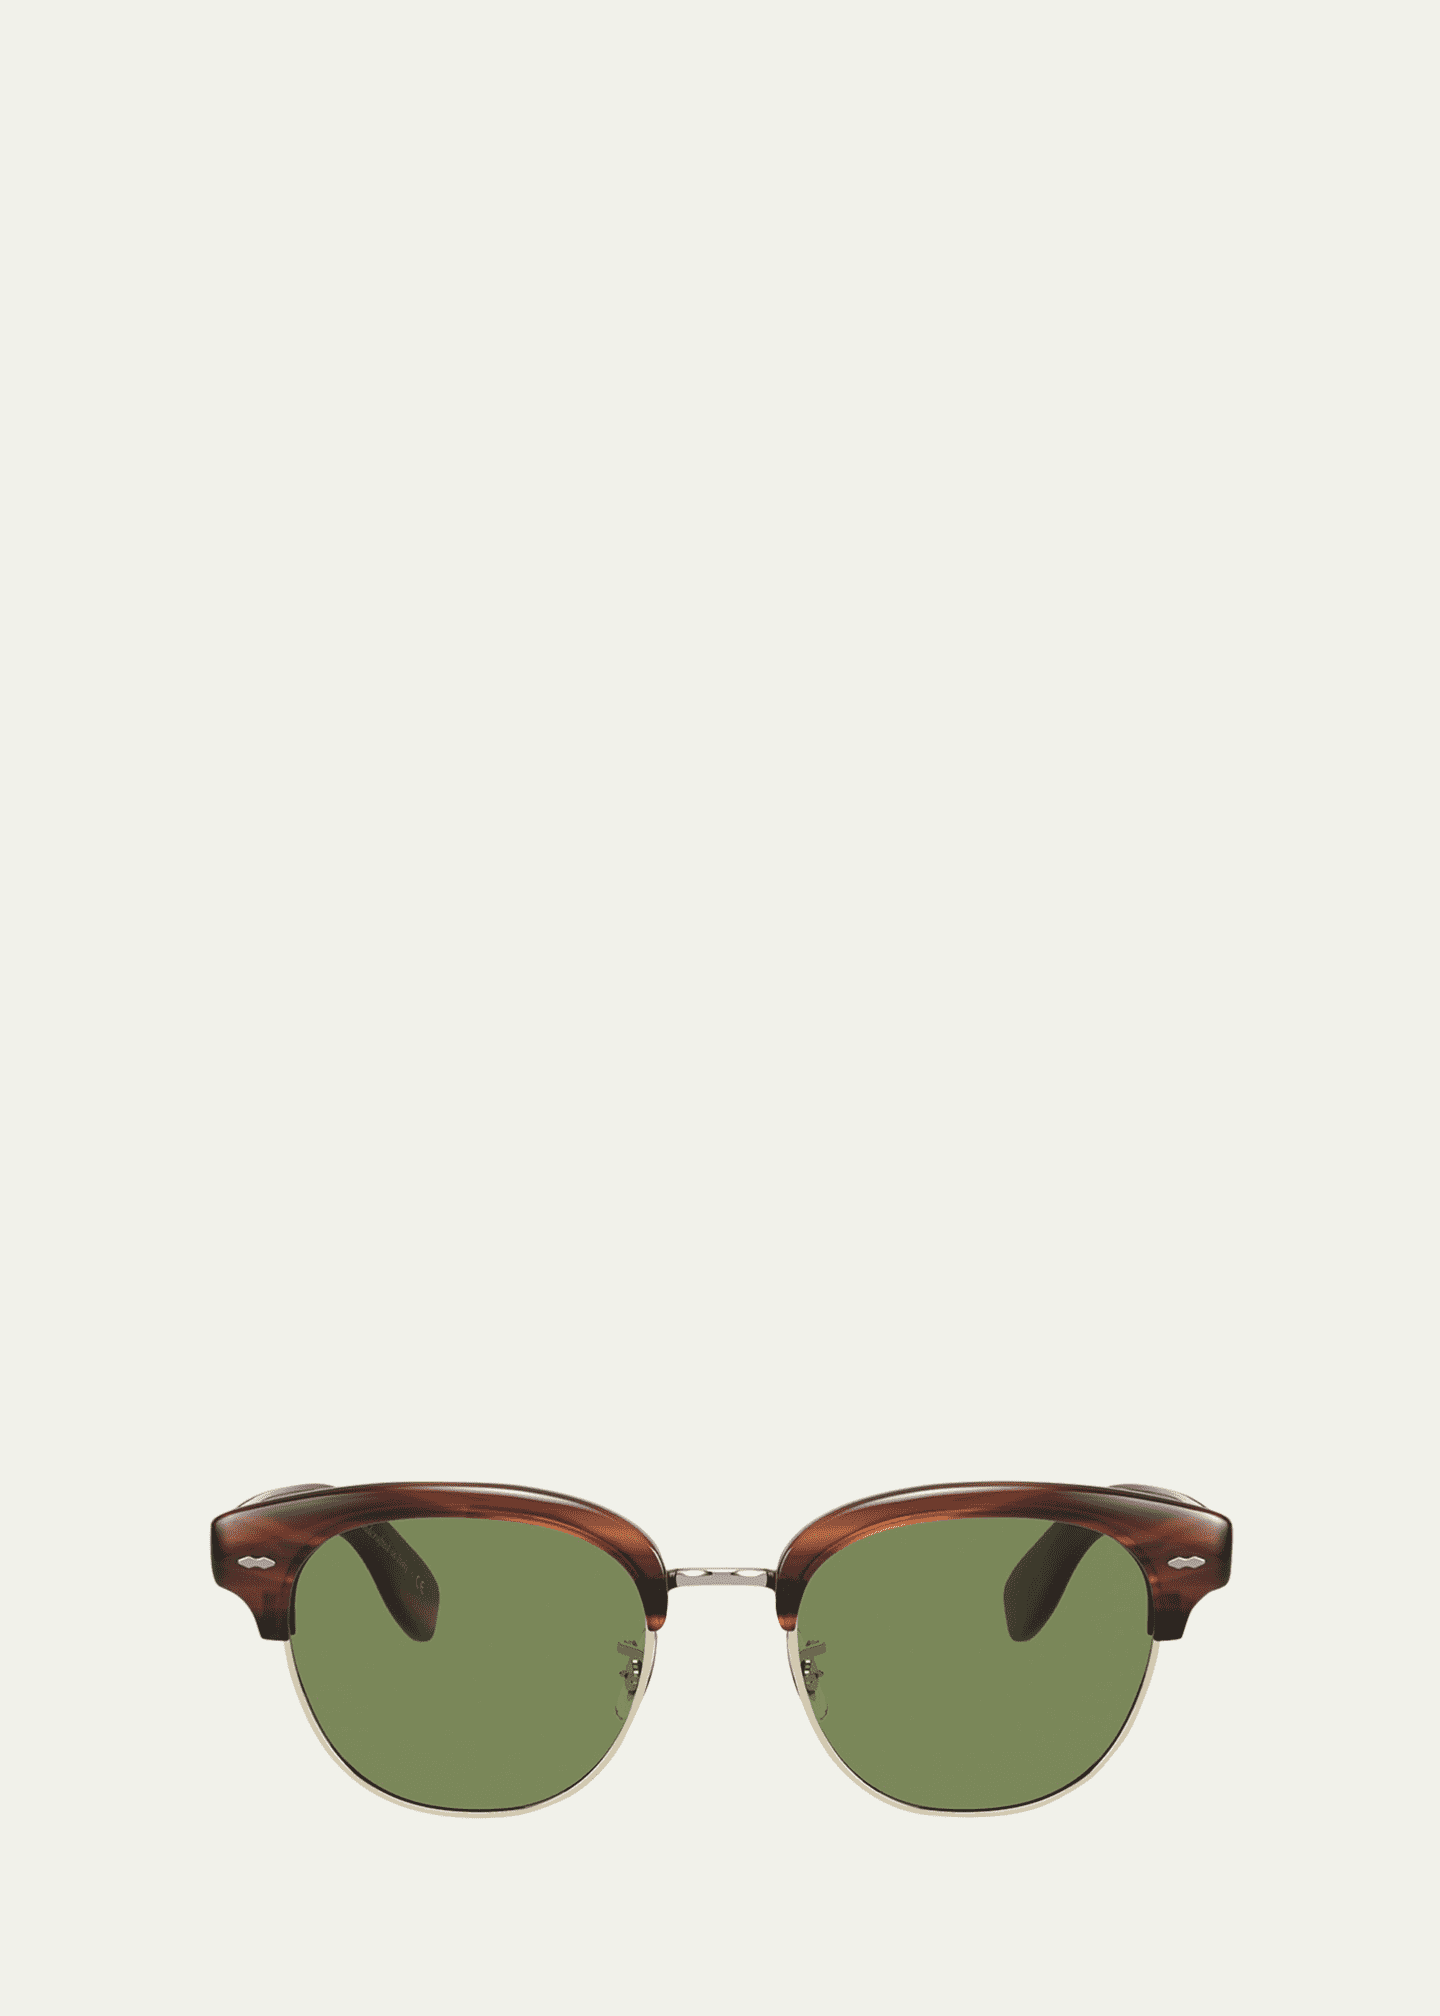 Oliver Peoples Men's Grant Half-Rim Sunglasses - Bergdorf Goodman